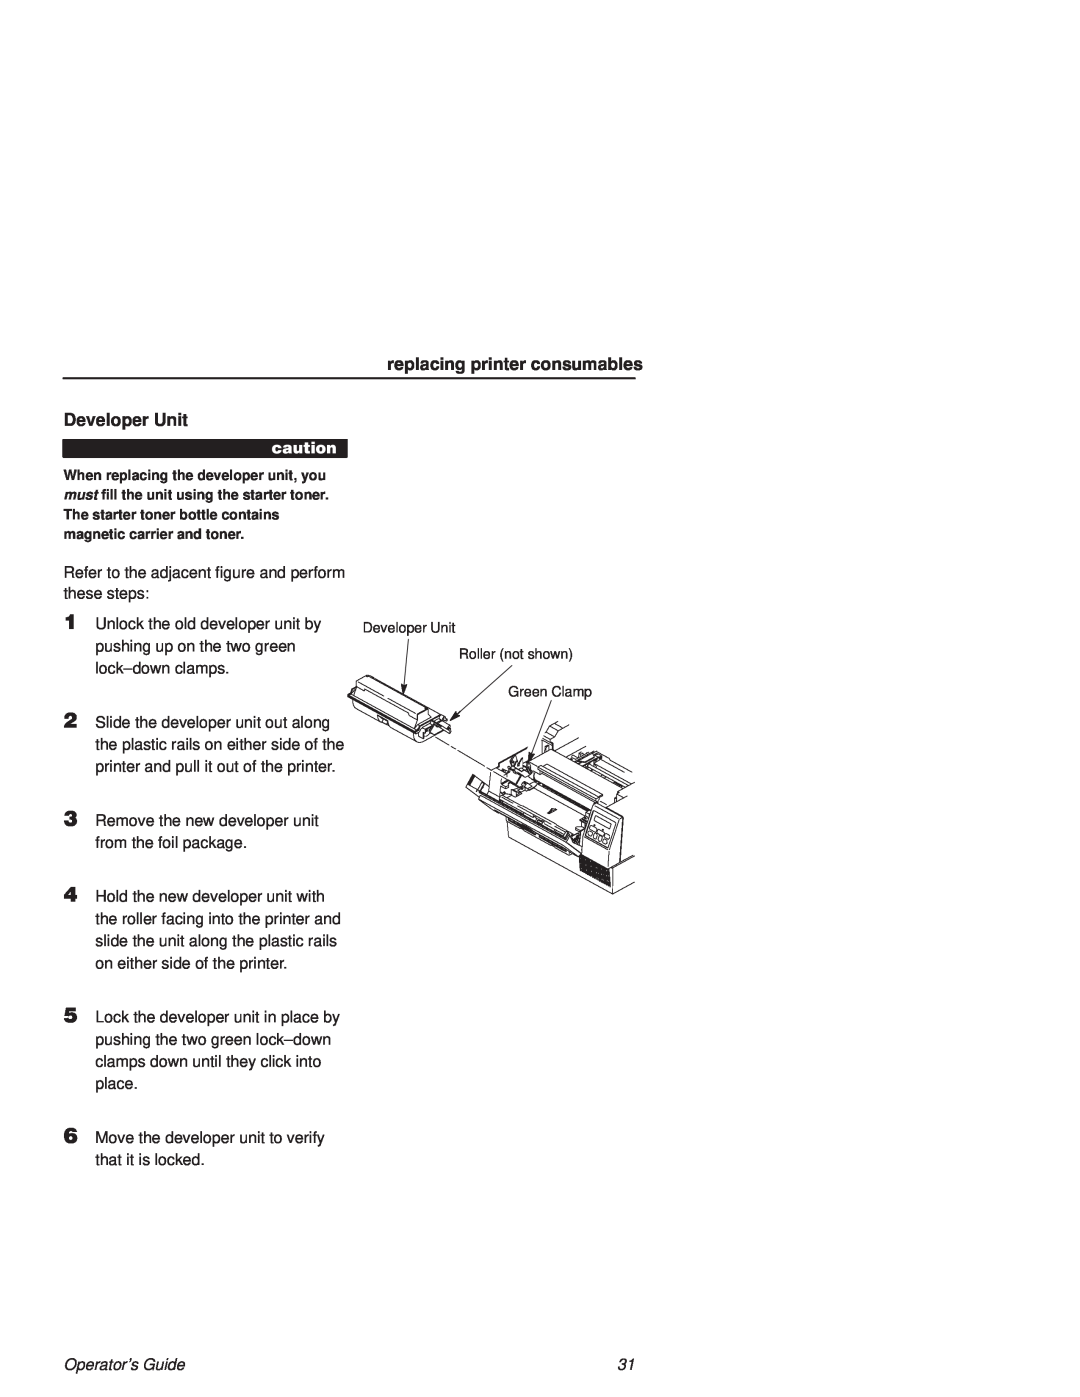 Printronix L1524 manual replacing printer consumables, Developer Unit, Operators Guide 